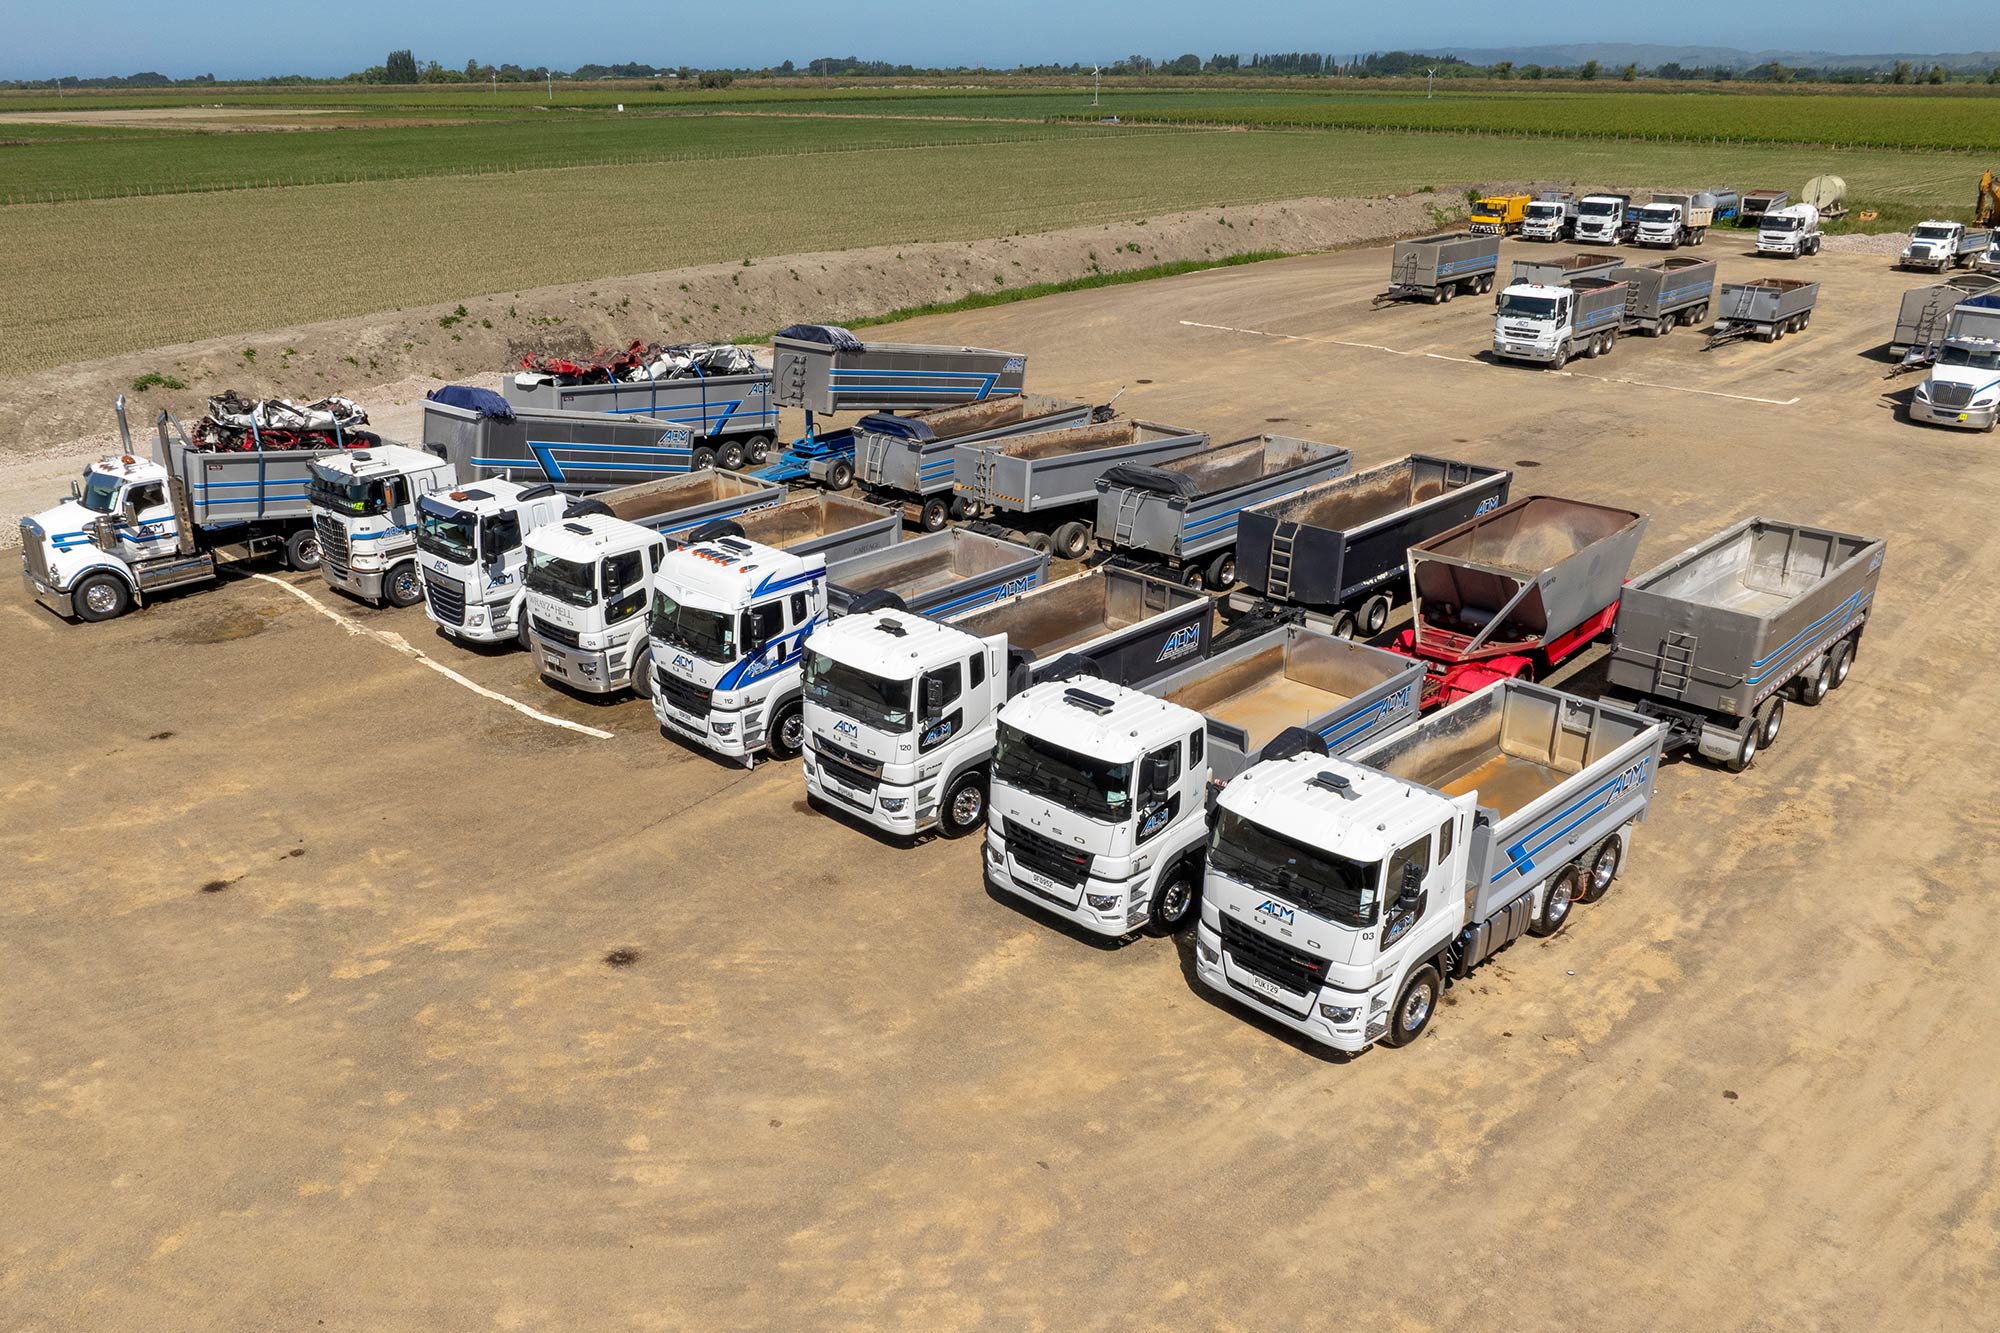 Drone image of trucks